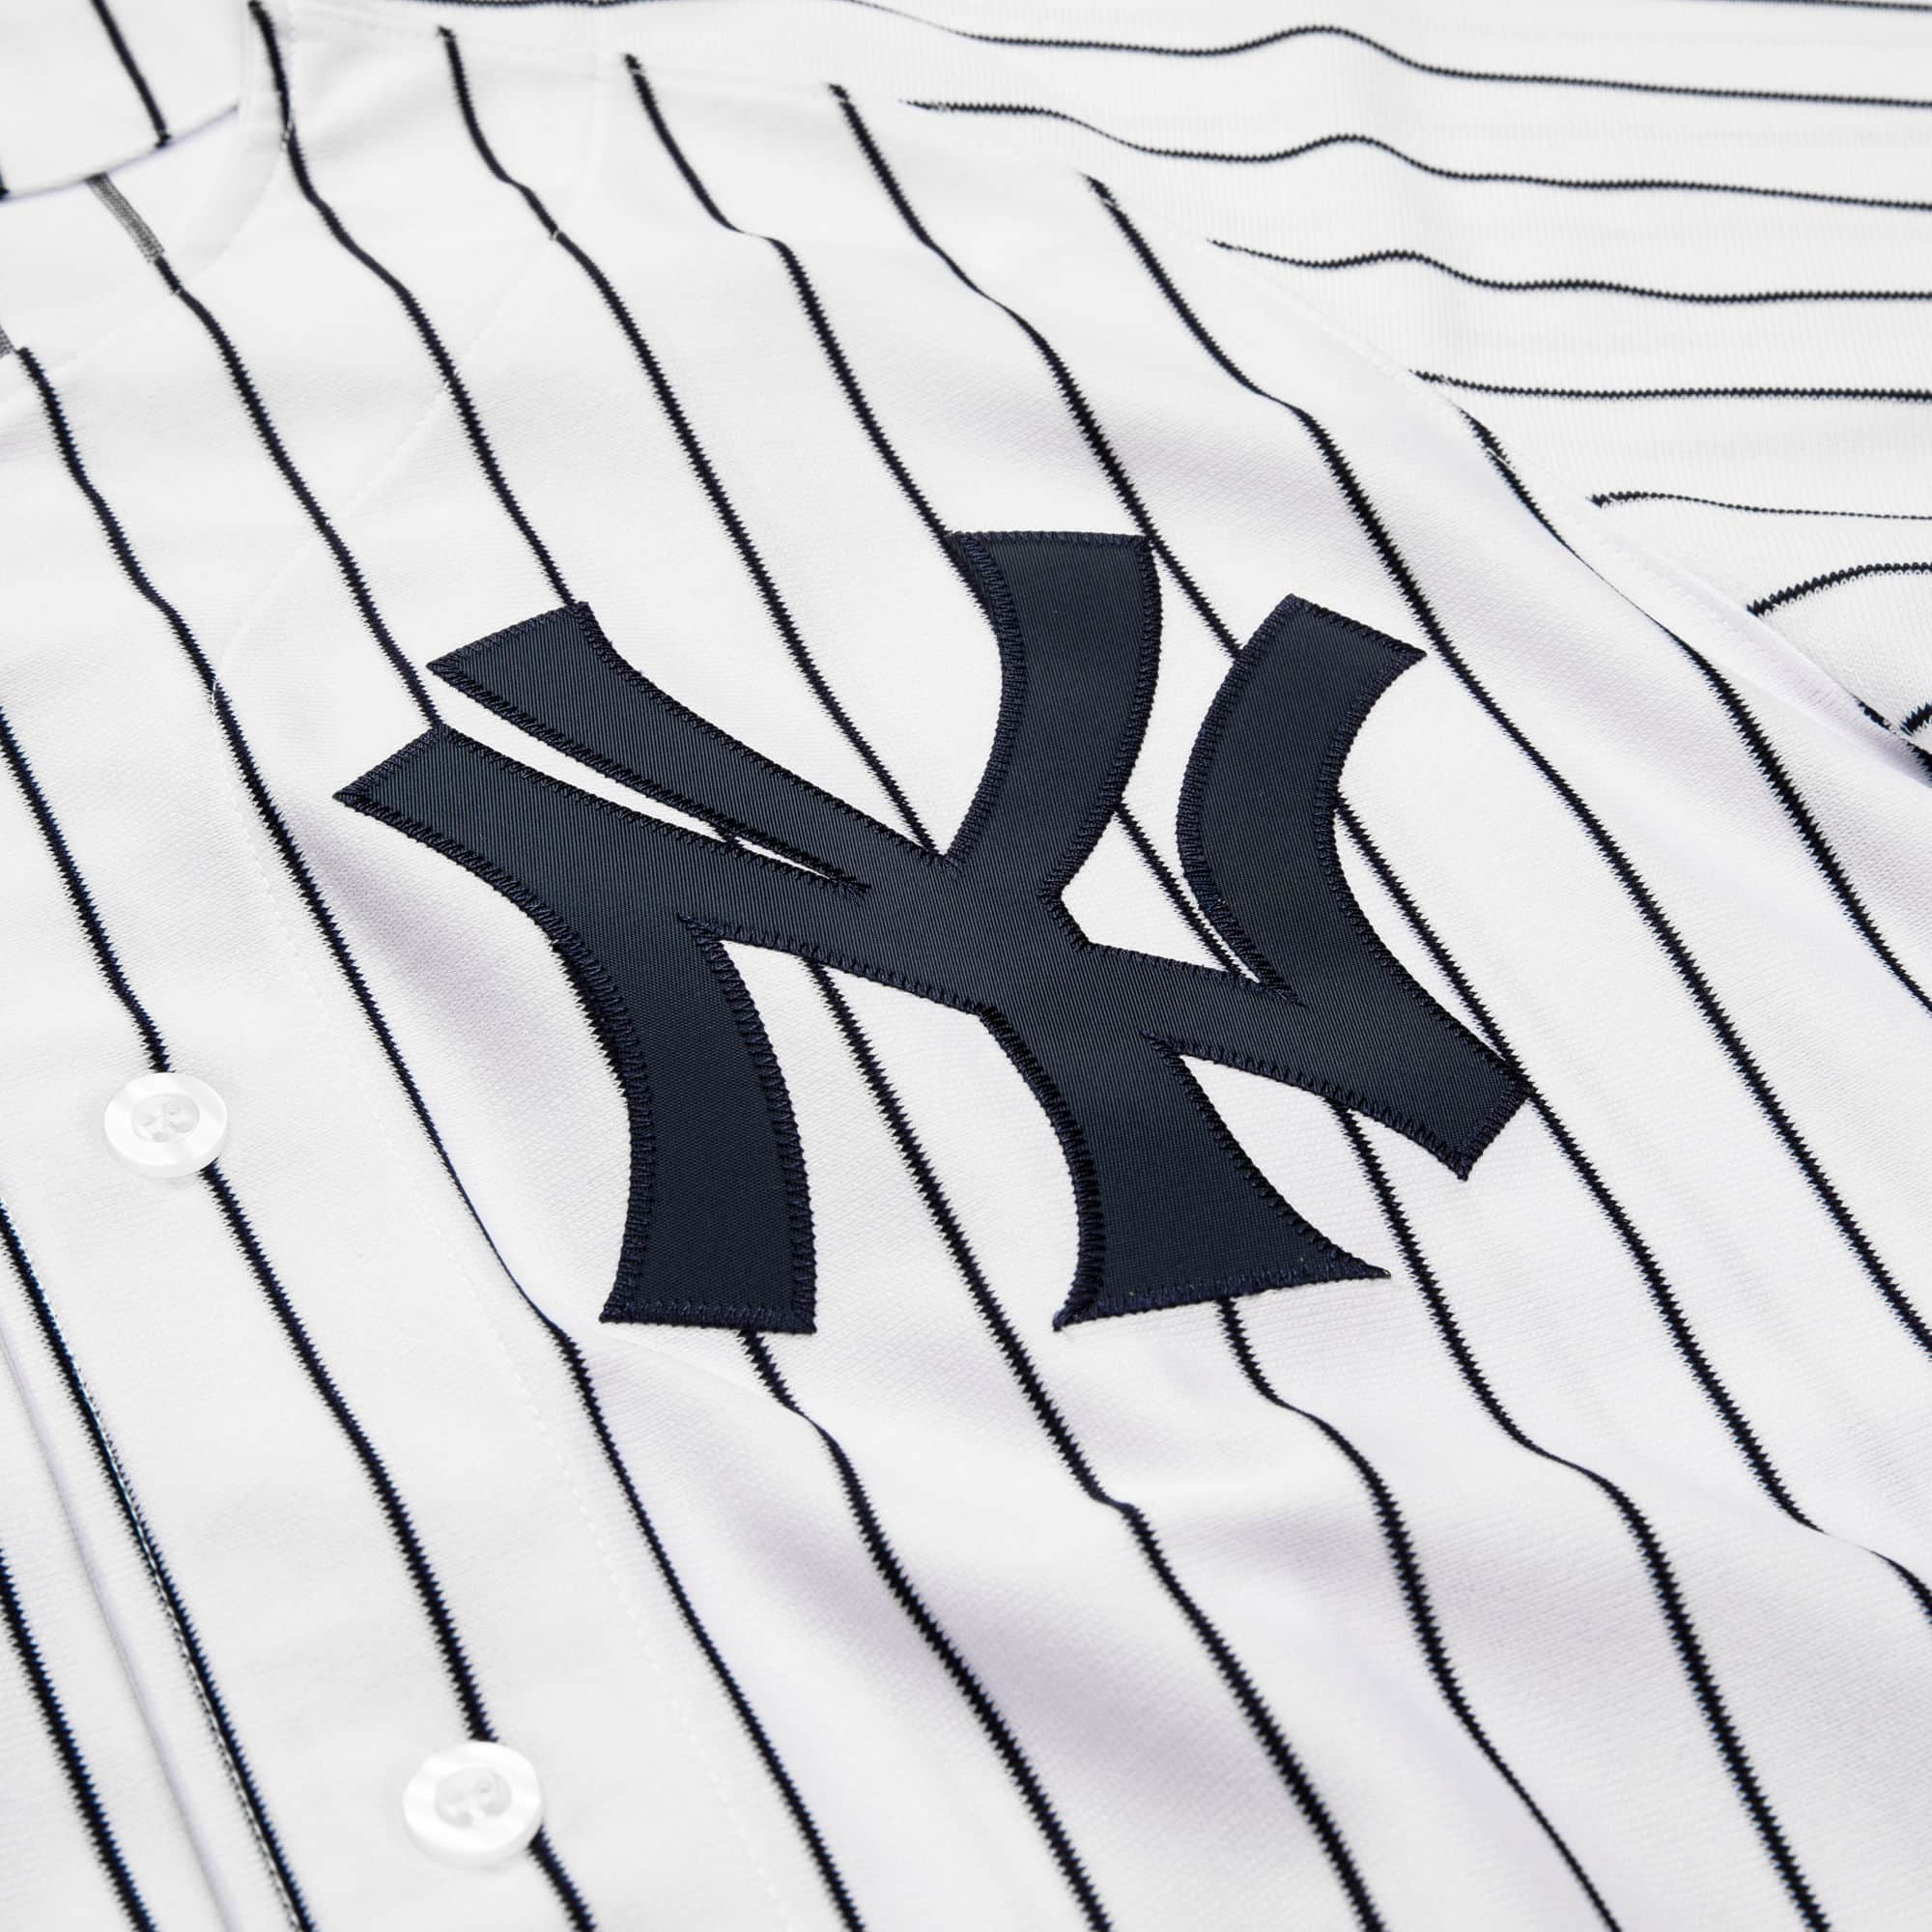 Men's Mitchell & Ness Derek Jeter Navy New York Yankees